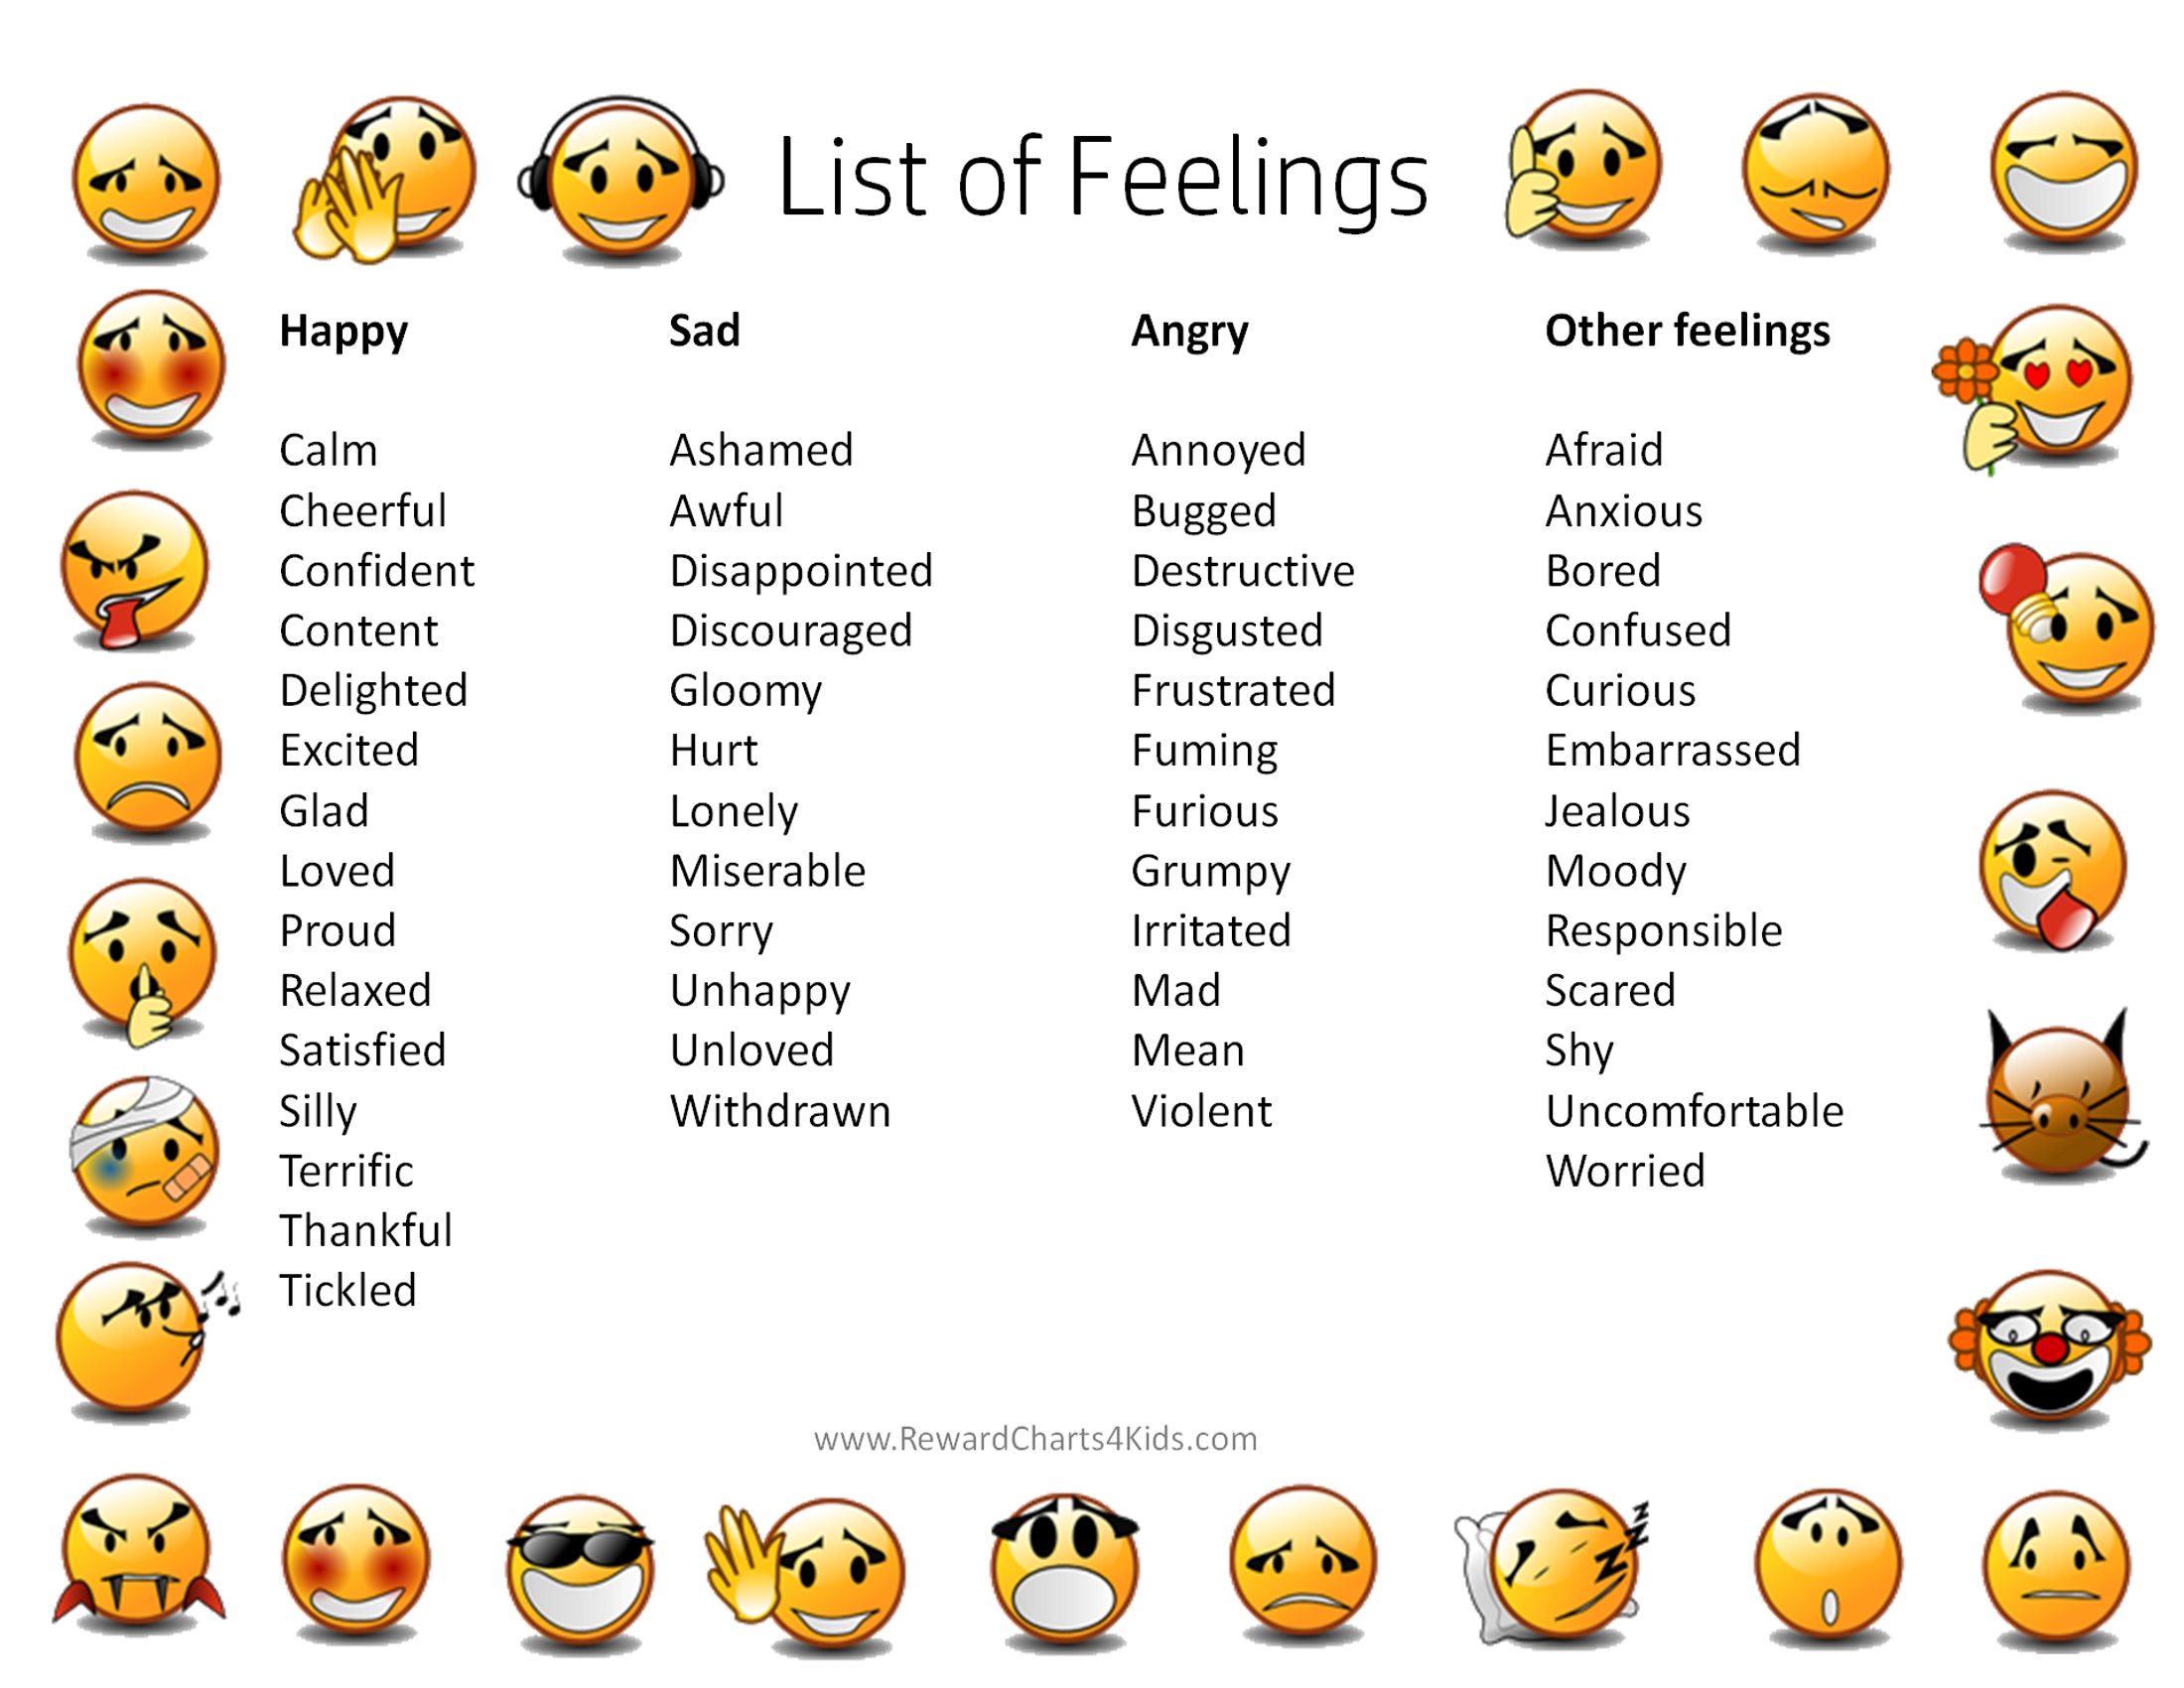 List Of Emotions And Feelings Pdf